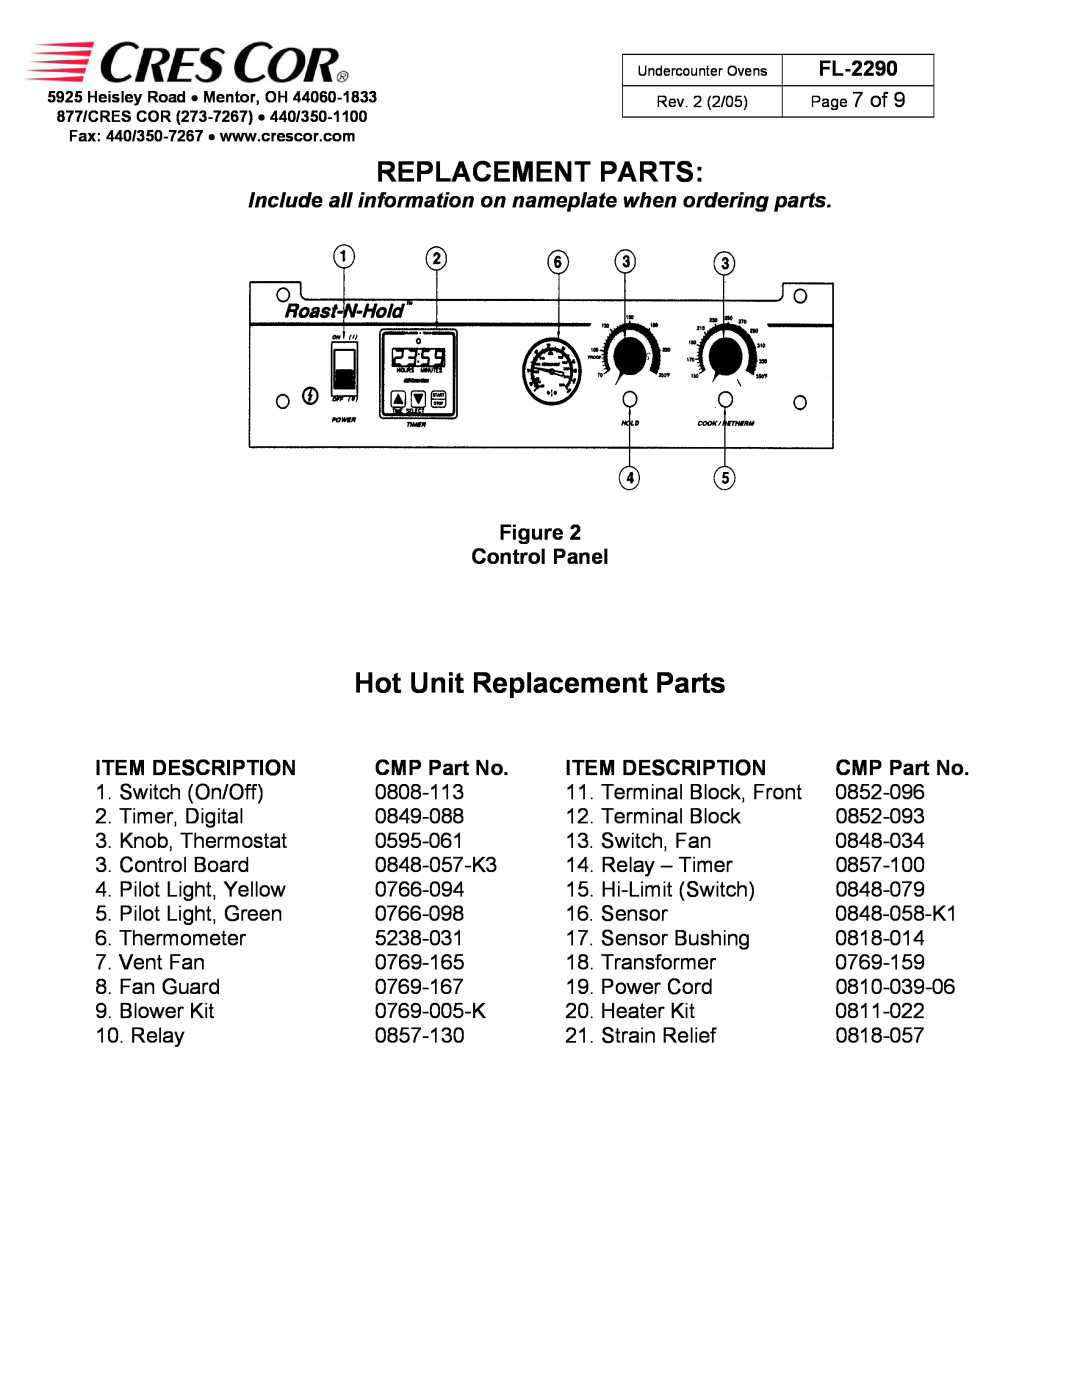 Cres Cor CO151XUA5B, CO151X185B Hot Unit Replacement Parts, FL-2290, Figure Control Panel, Item Description, CMP Part No 